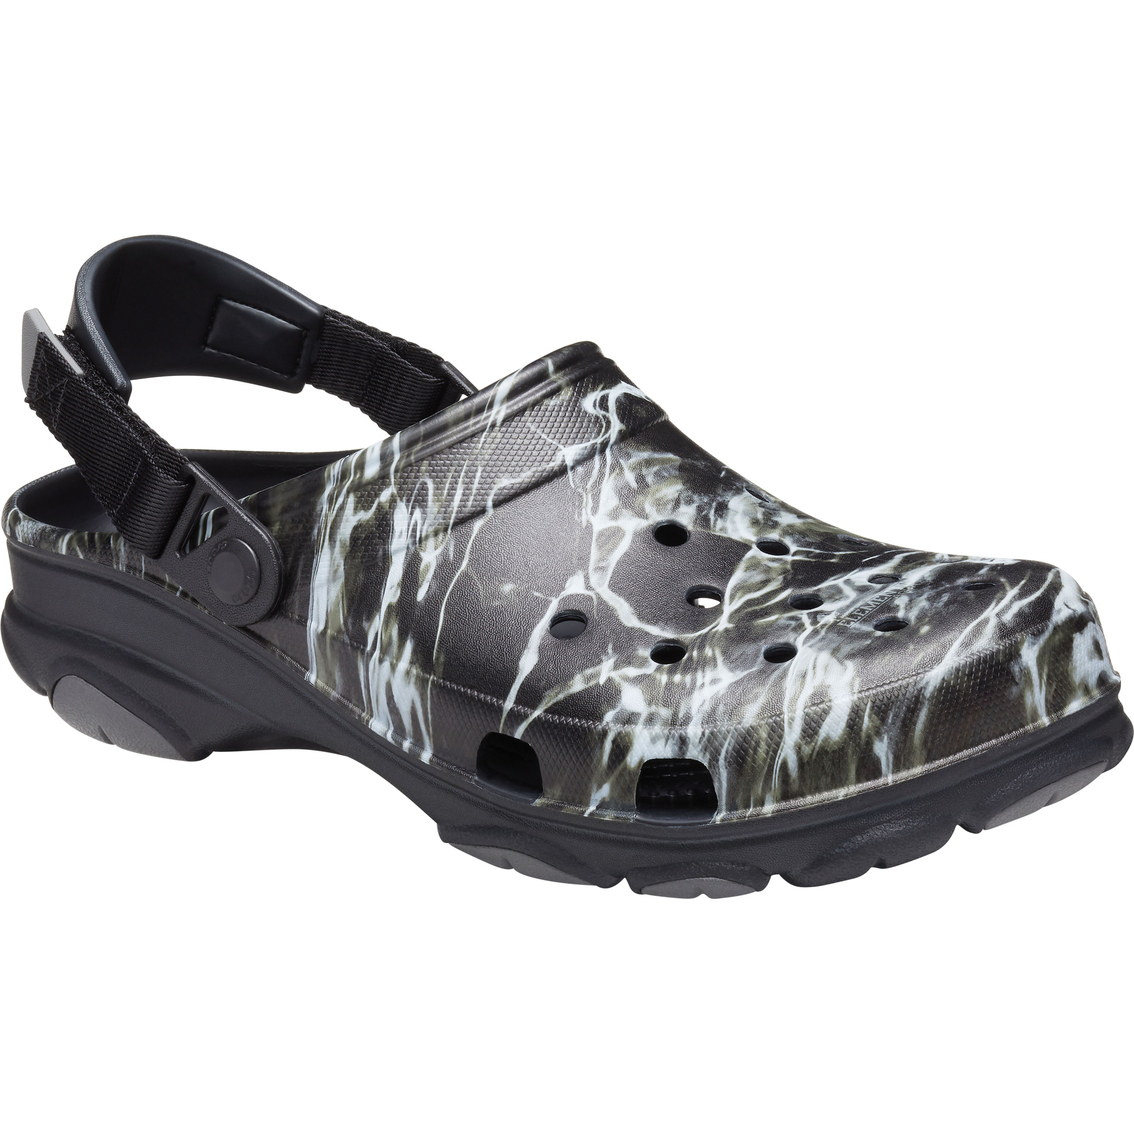 Crocs Men's Offroad Mossy Oak Clogs, Sandals & Flip Flops